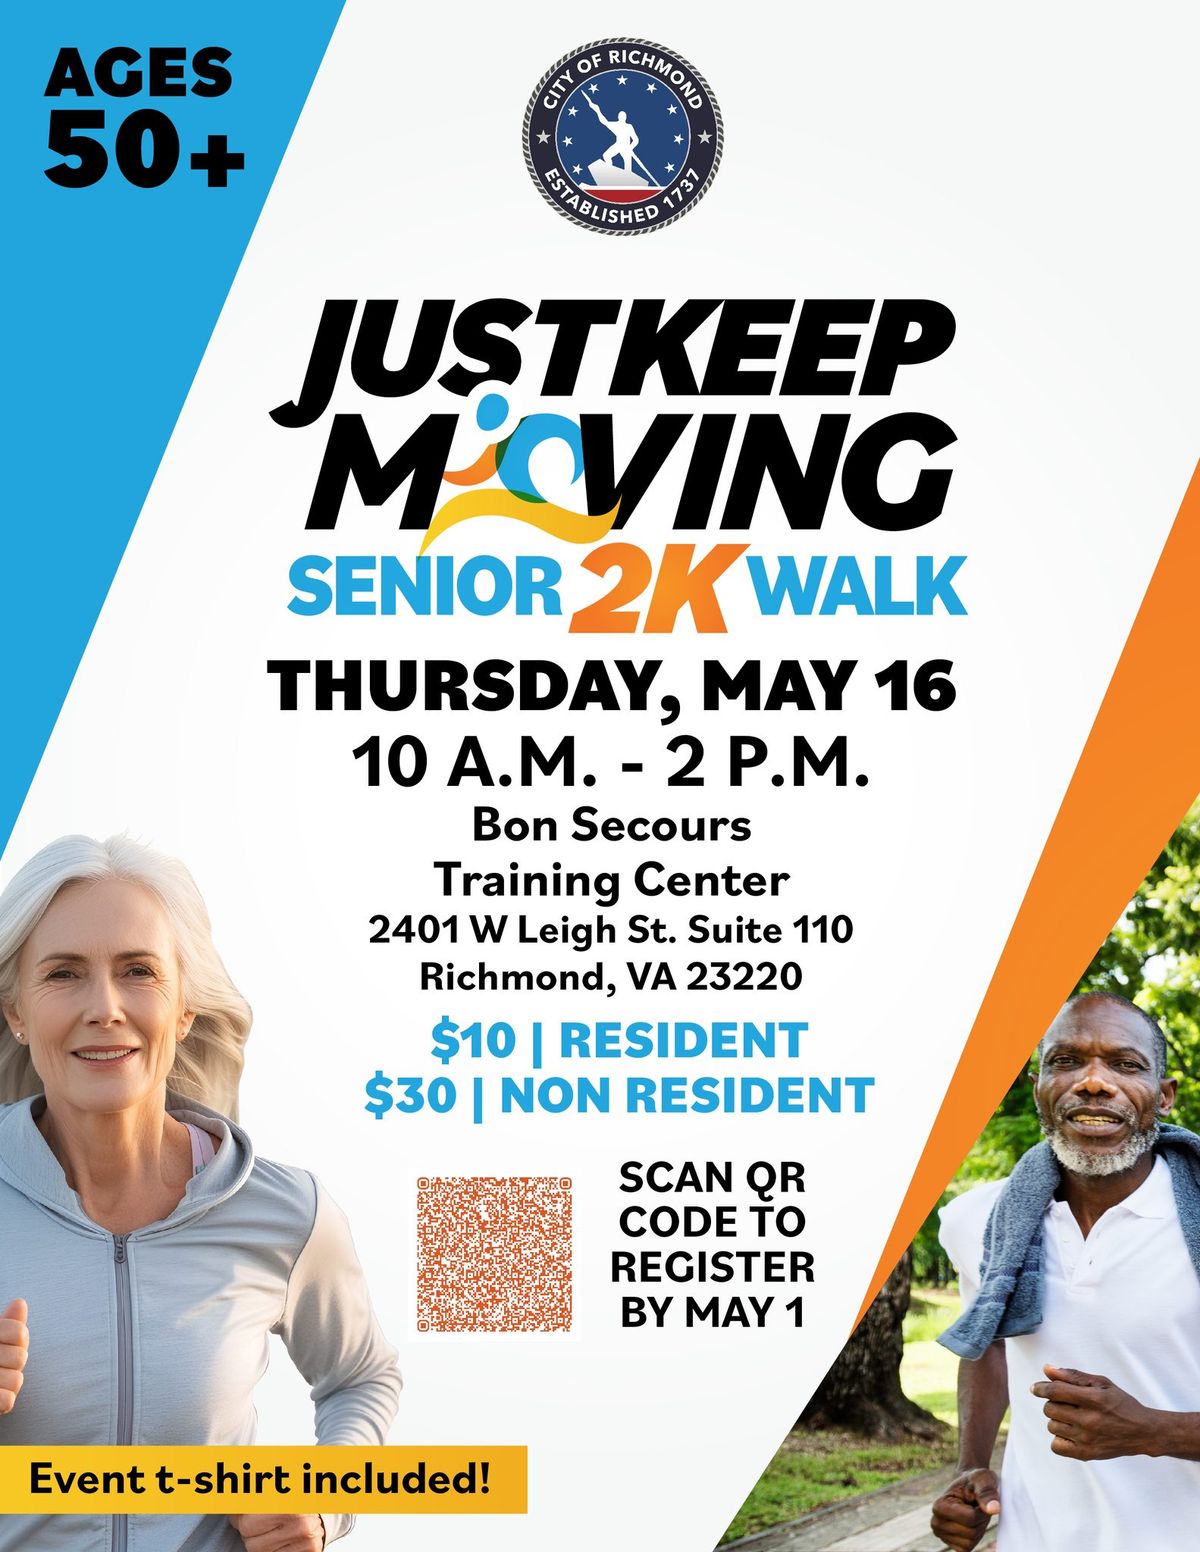 Just Keep Moving - Senior 2K Walk